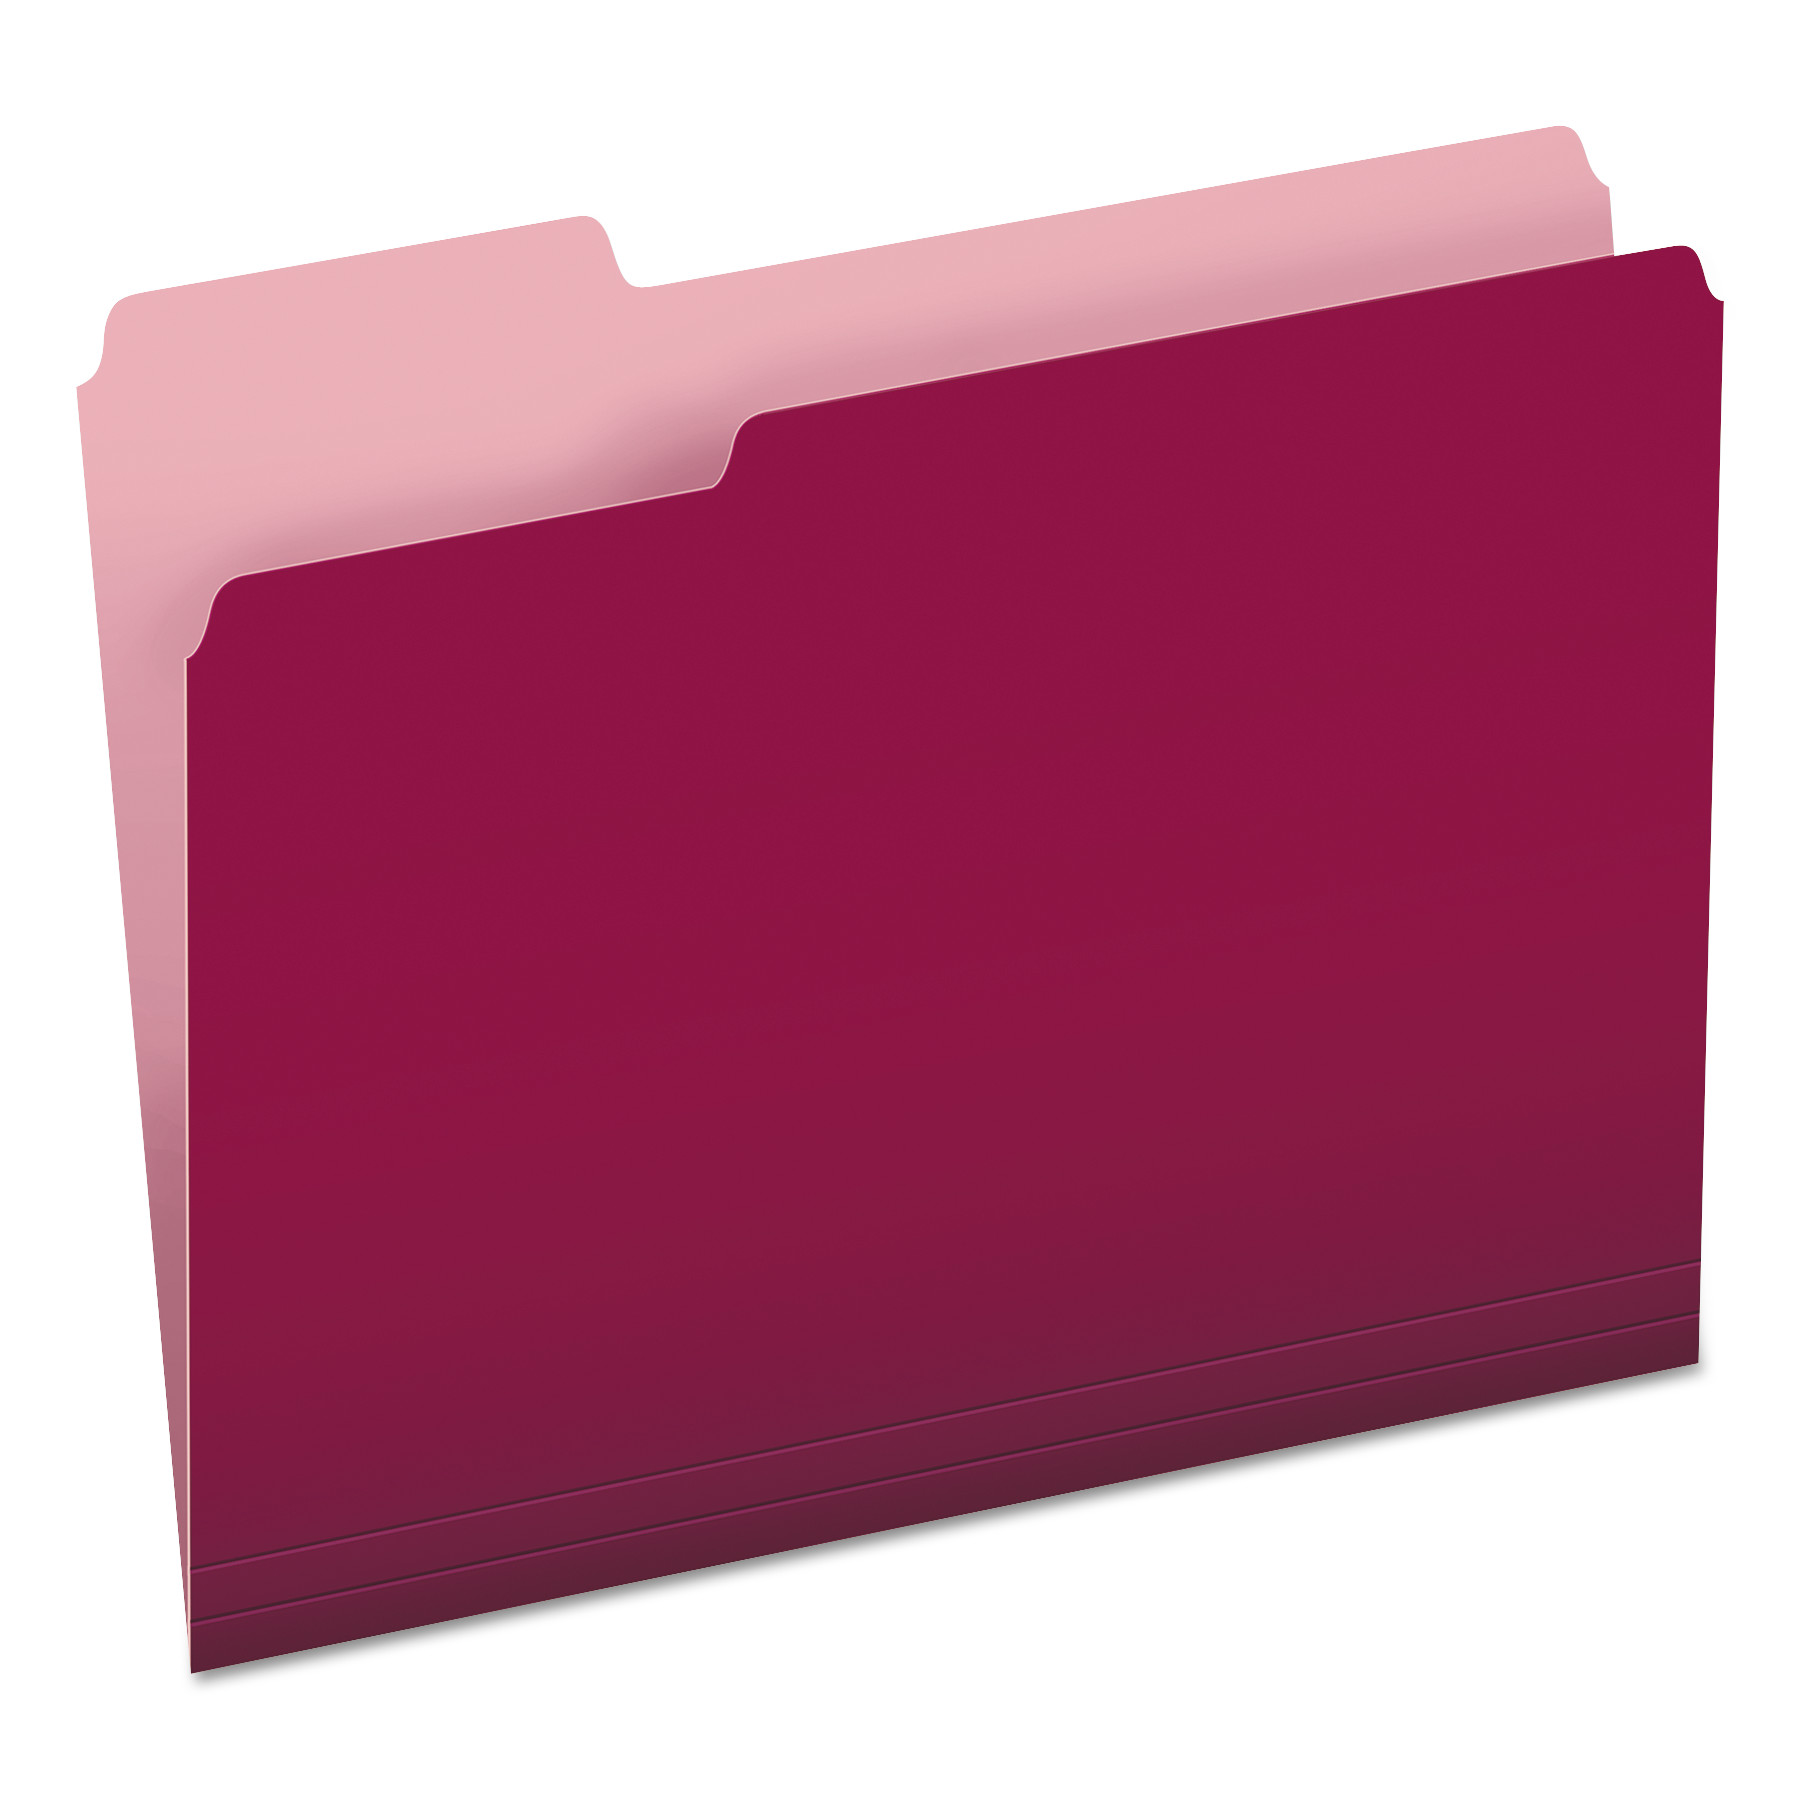  Pendaflex 152 1/3 BUR Colored File Folders, 1/3-Cut Tabs, Letter Size, Burgundy/Light Burgundy, 100/Box (PFX15213BUR) 